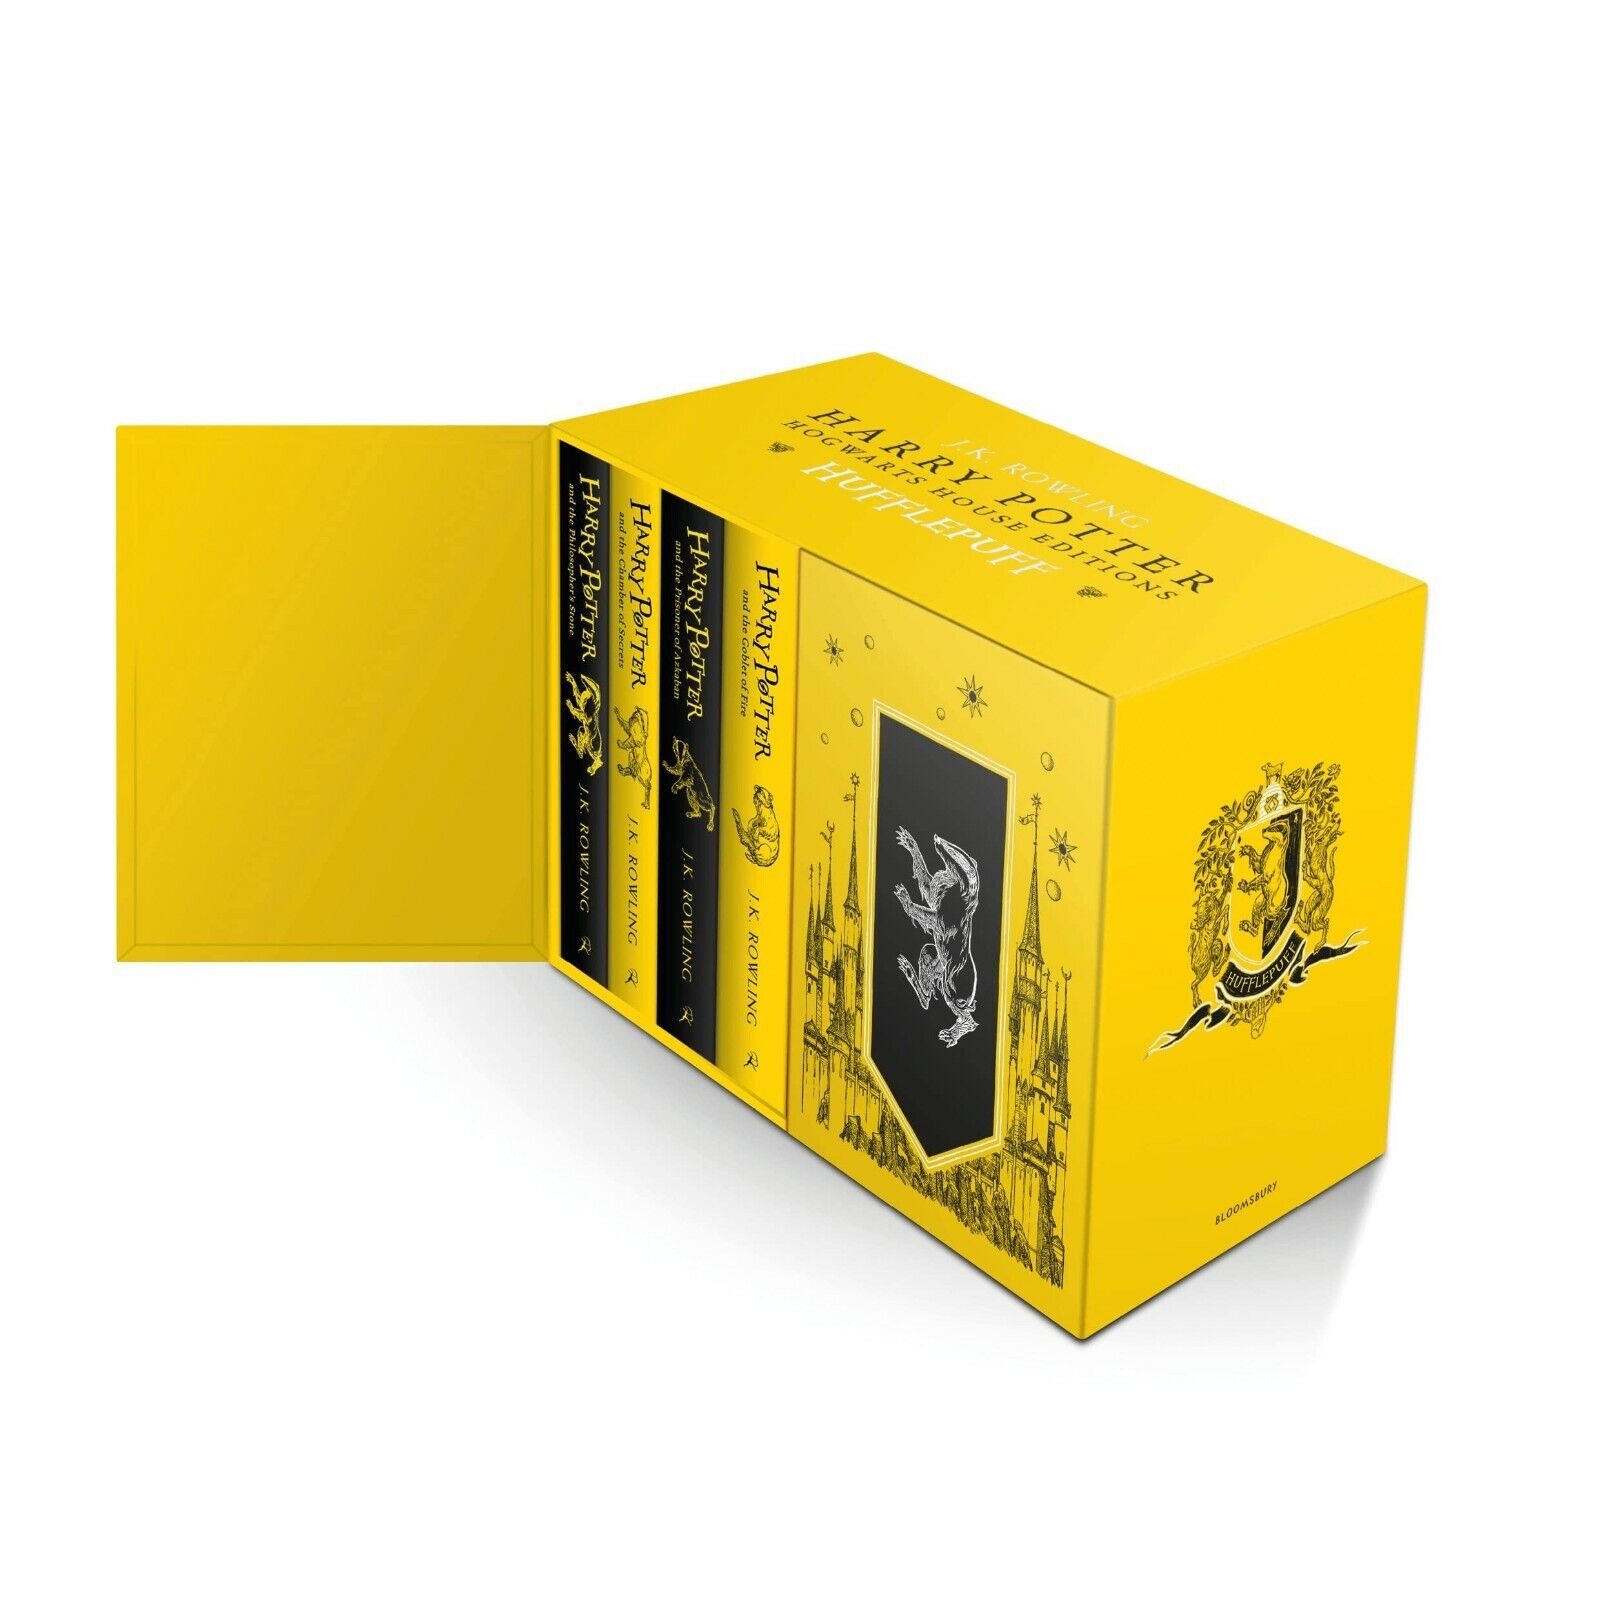 Harry Potter Hufflepuff House Editions Hardback Box Set: J.K. Rowling - Hardback